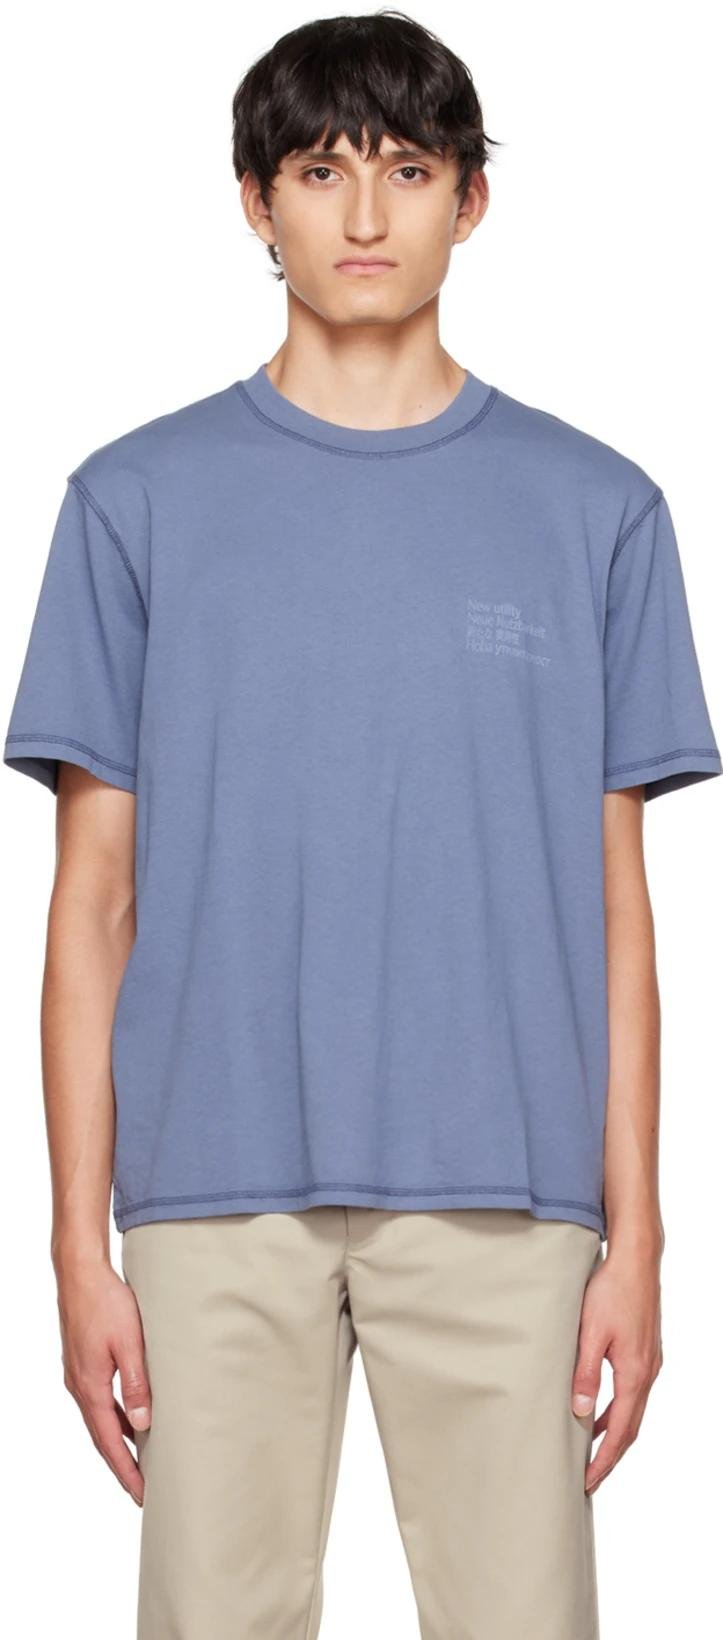 Blue Overlock Stitch T-Shirt by AFFXWRKS